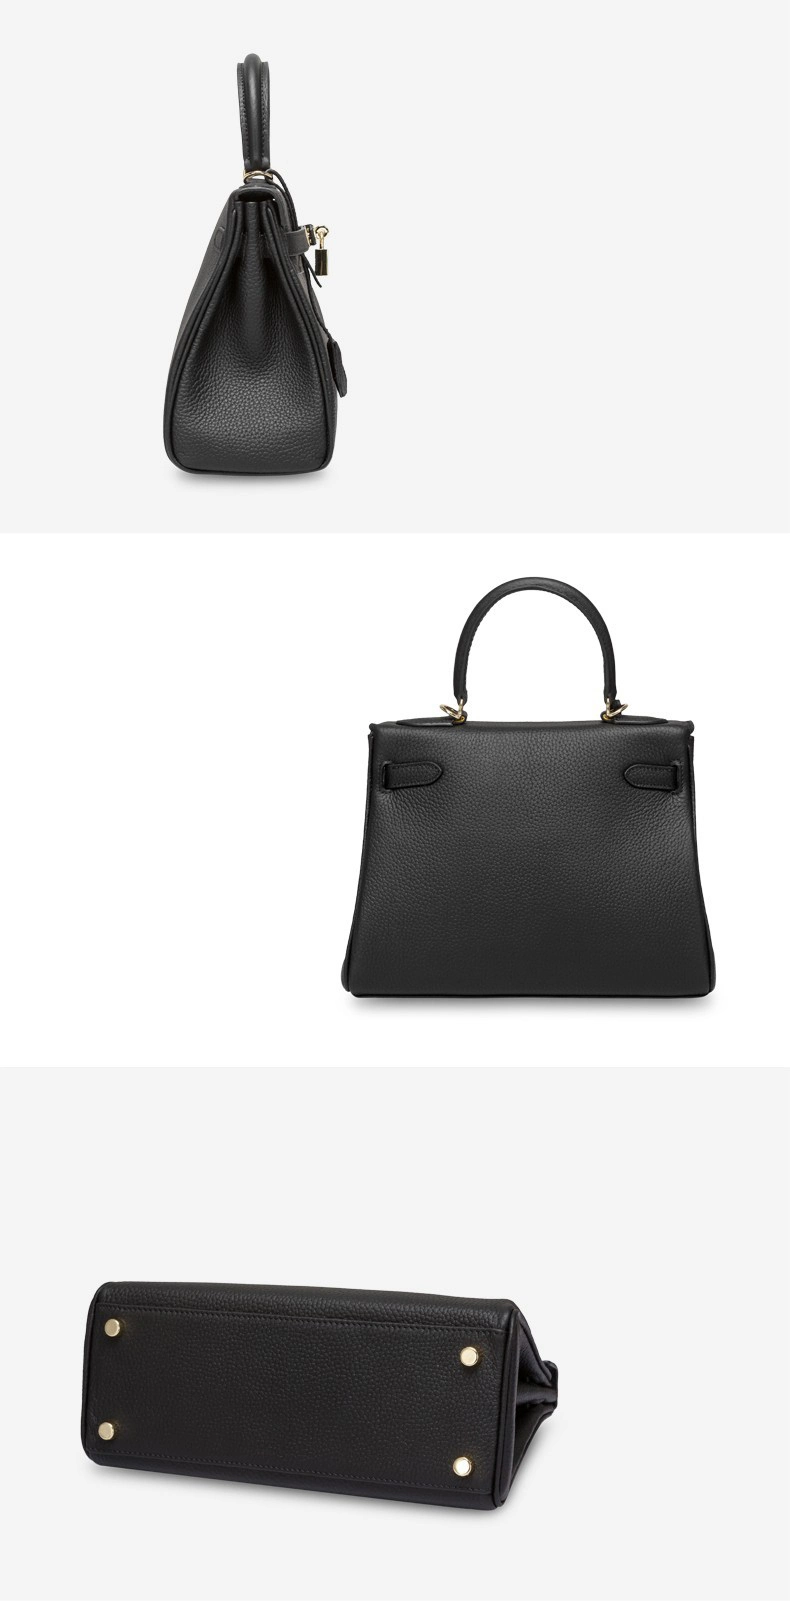 Soft Cowhide Leather Tote Handbag 25 Kelly Sling Bags Singapore Luxury Classical Designer Handbags Emg5590